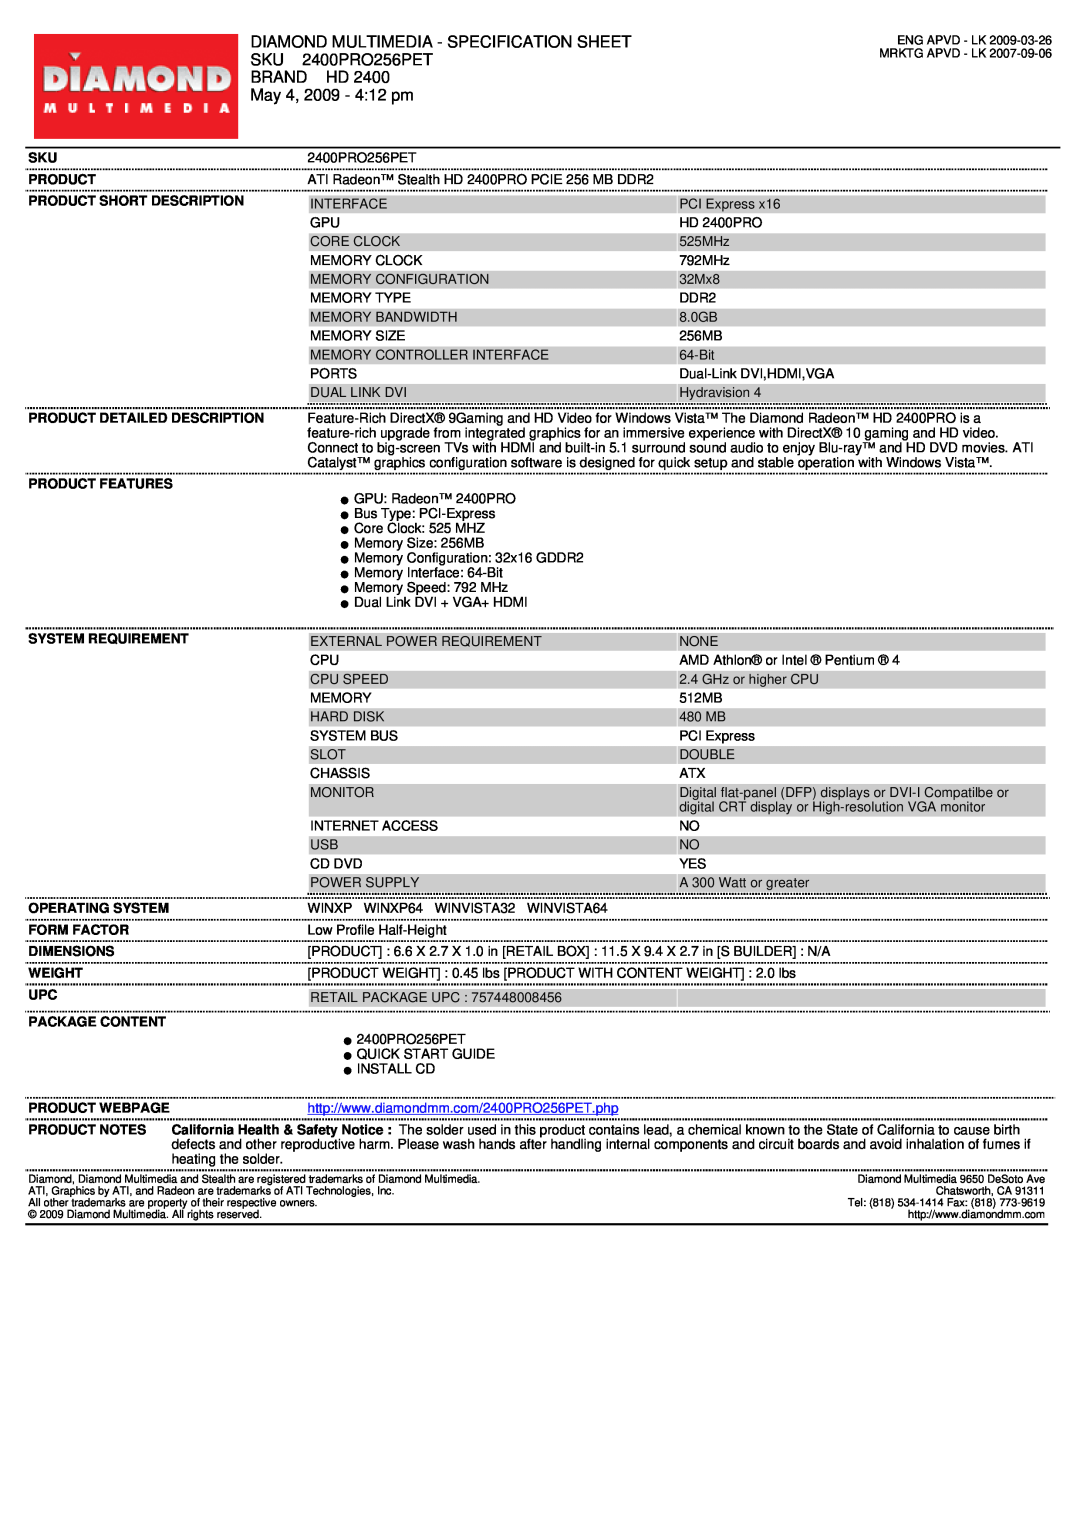 Diamond Multimedia 2400PRO256PET specifications Diamond Multimedia - Specification Sheet, Brand Hd, May 4, 2009 - 412 pm 